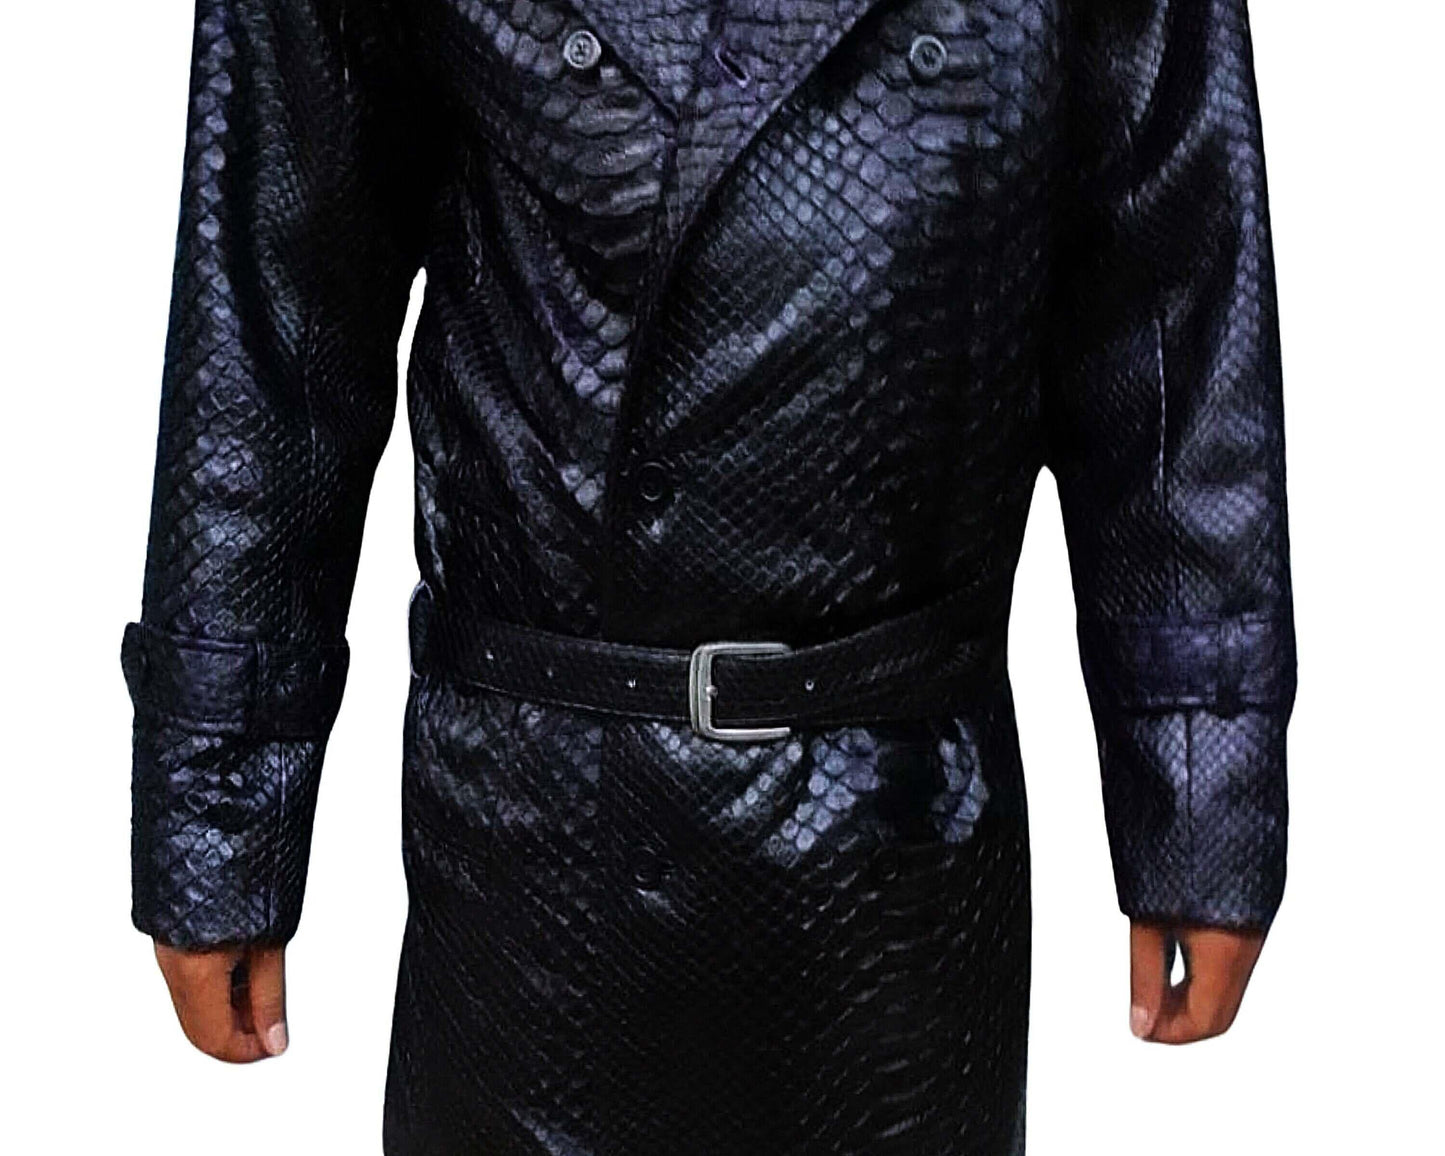 Snakeskin Trench Coats Python Jacket by LFM Fashion